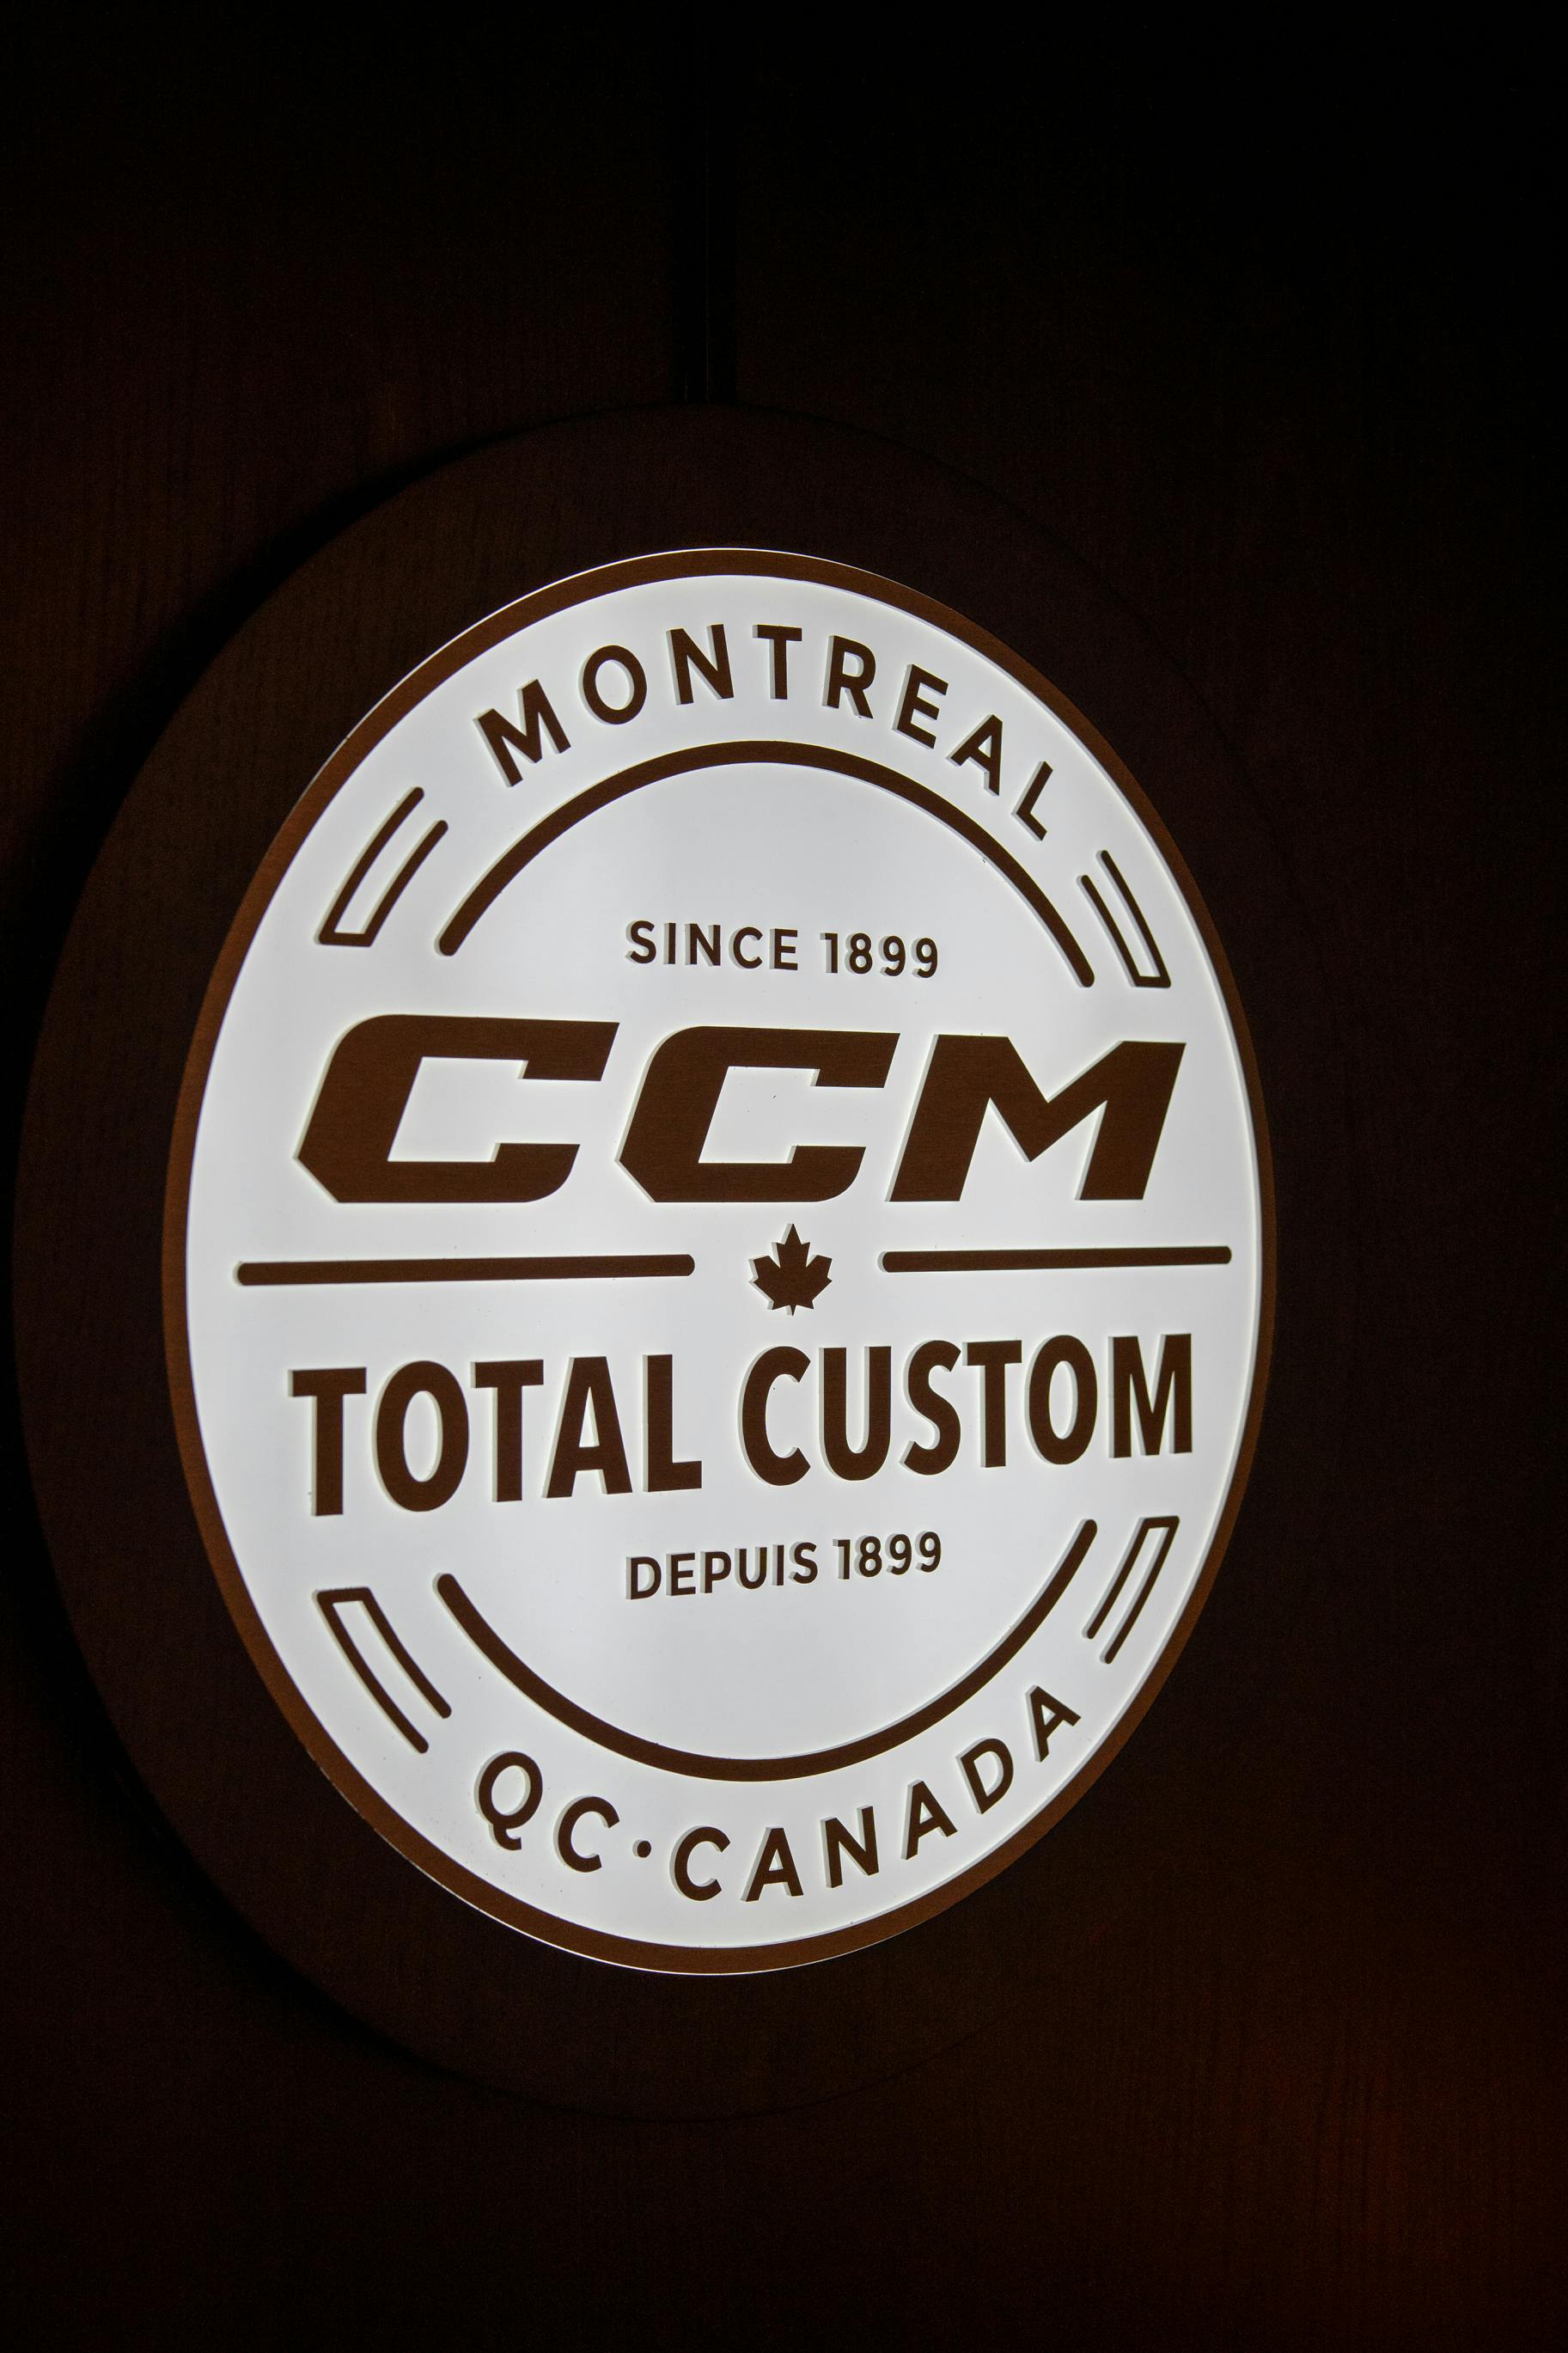 CCM Total Custom